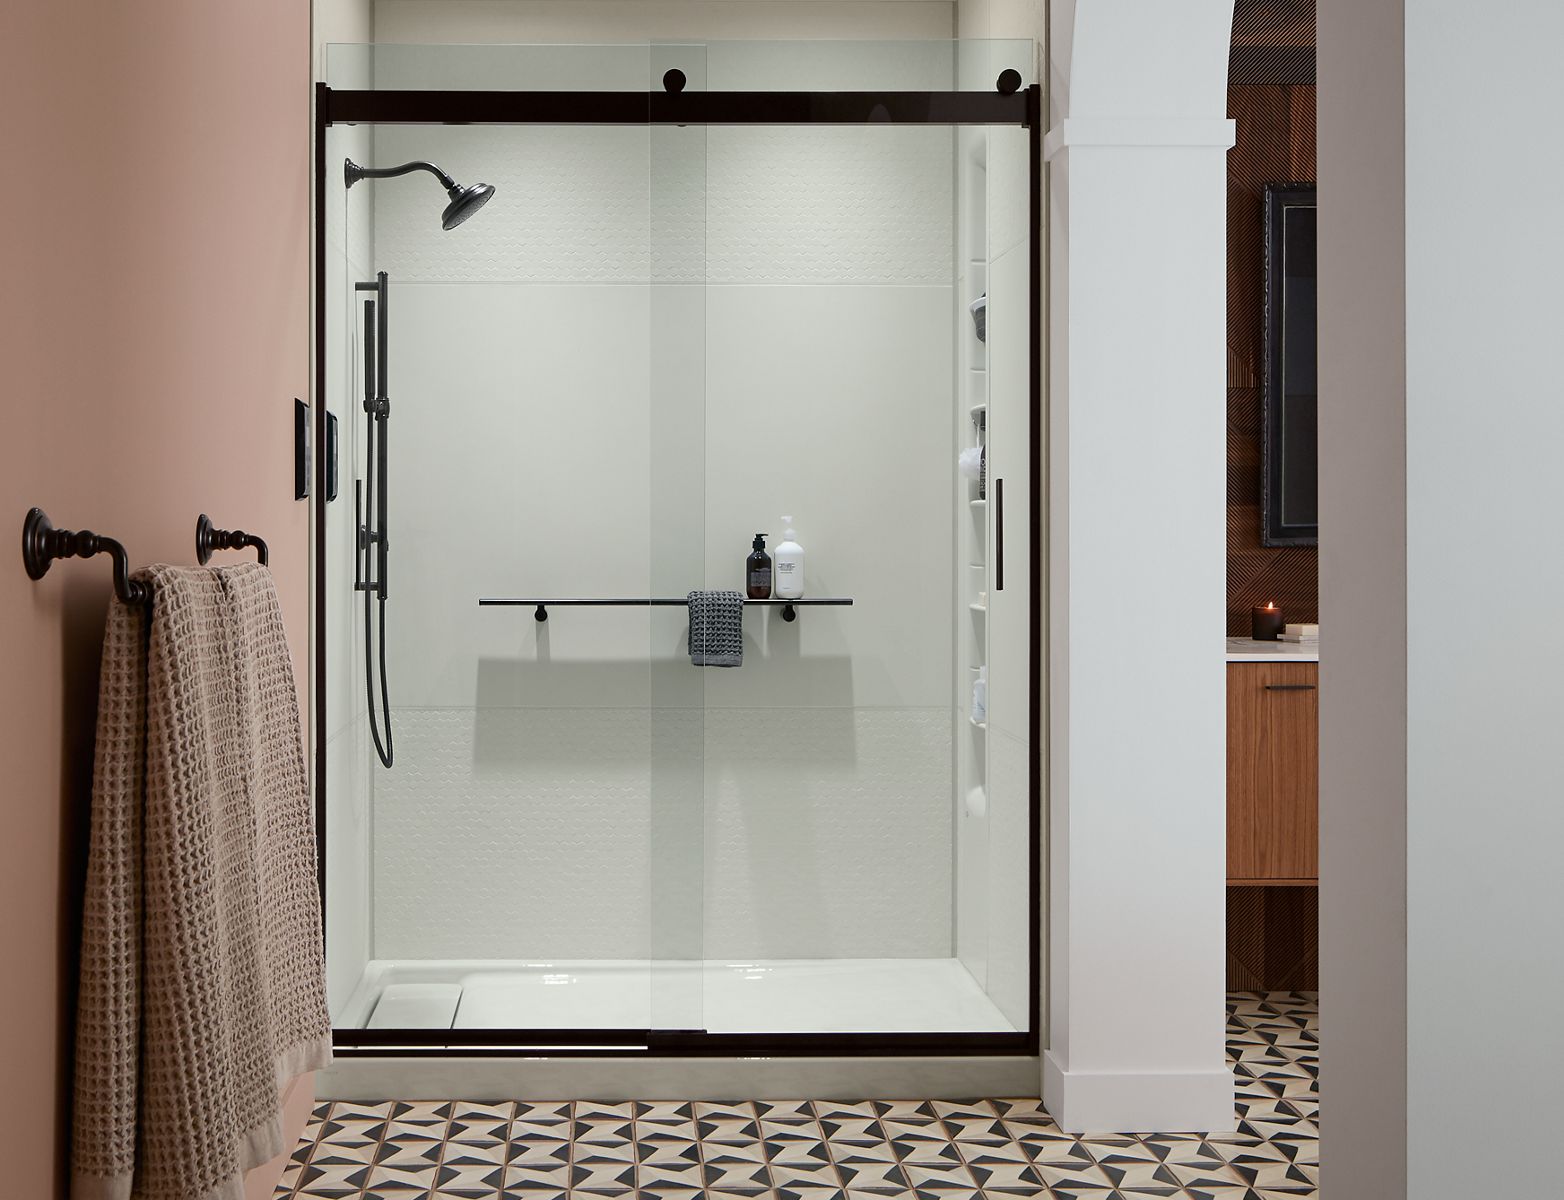 We Provide Reasonable Beautiful And Wholesale Shower Enclosures Cubicles Shower Doors Online And In Store Diy Shower Door Shower Doors Glass Shower Doors